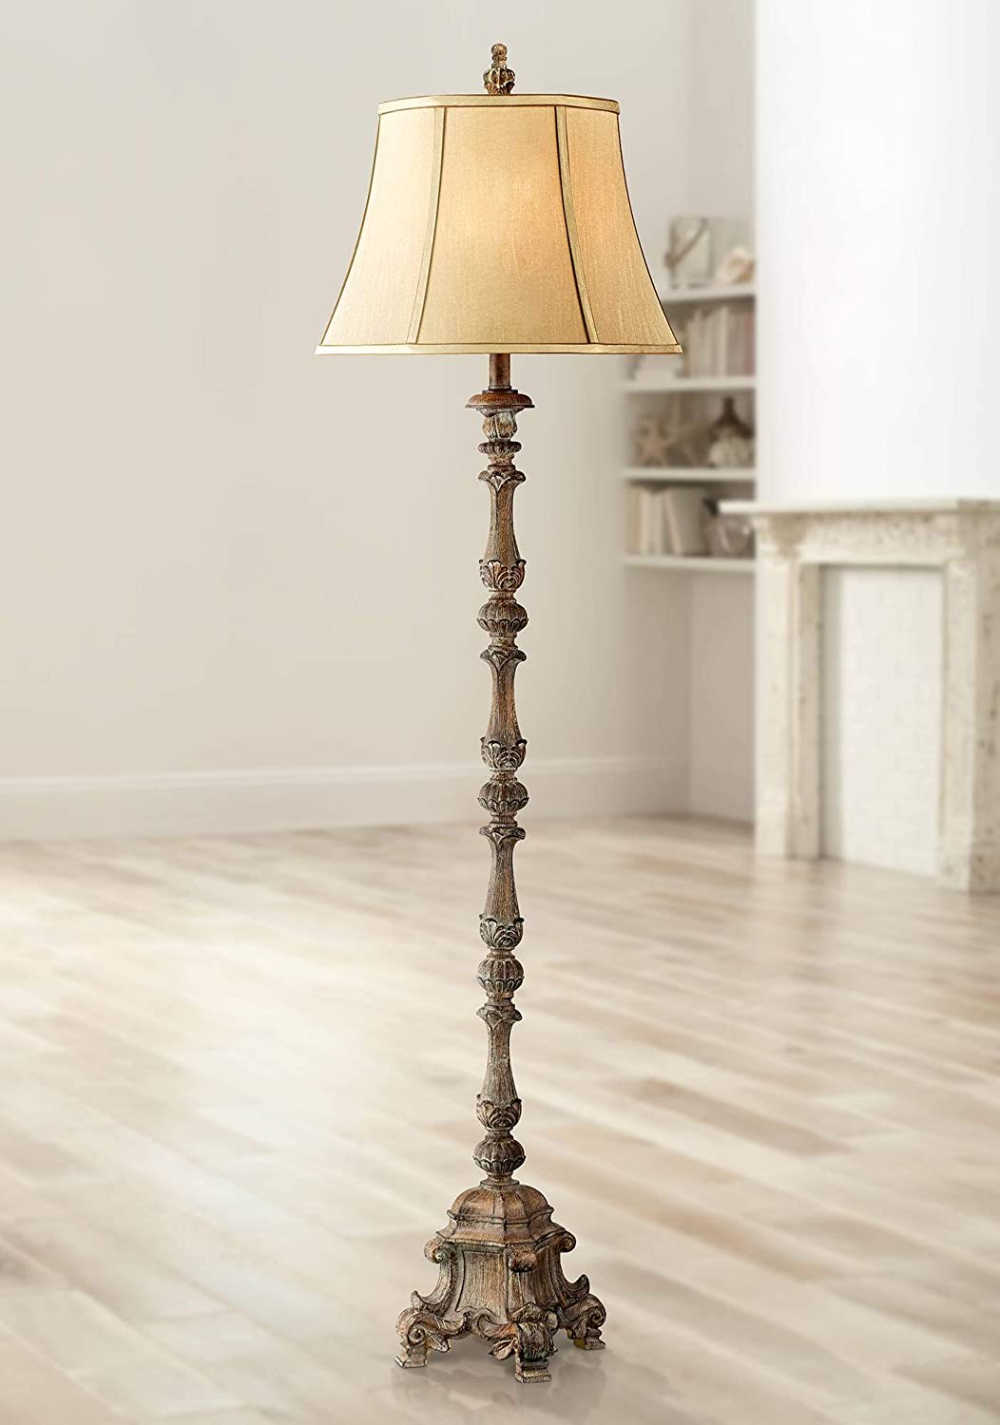 Antique Floor Lamps Elegant Lighting Fixtures for a Timeless Decor